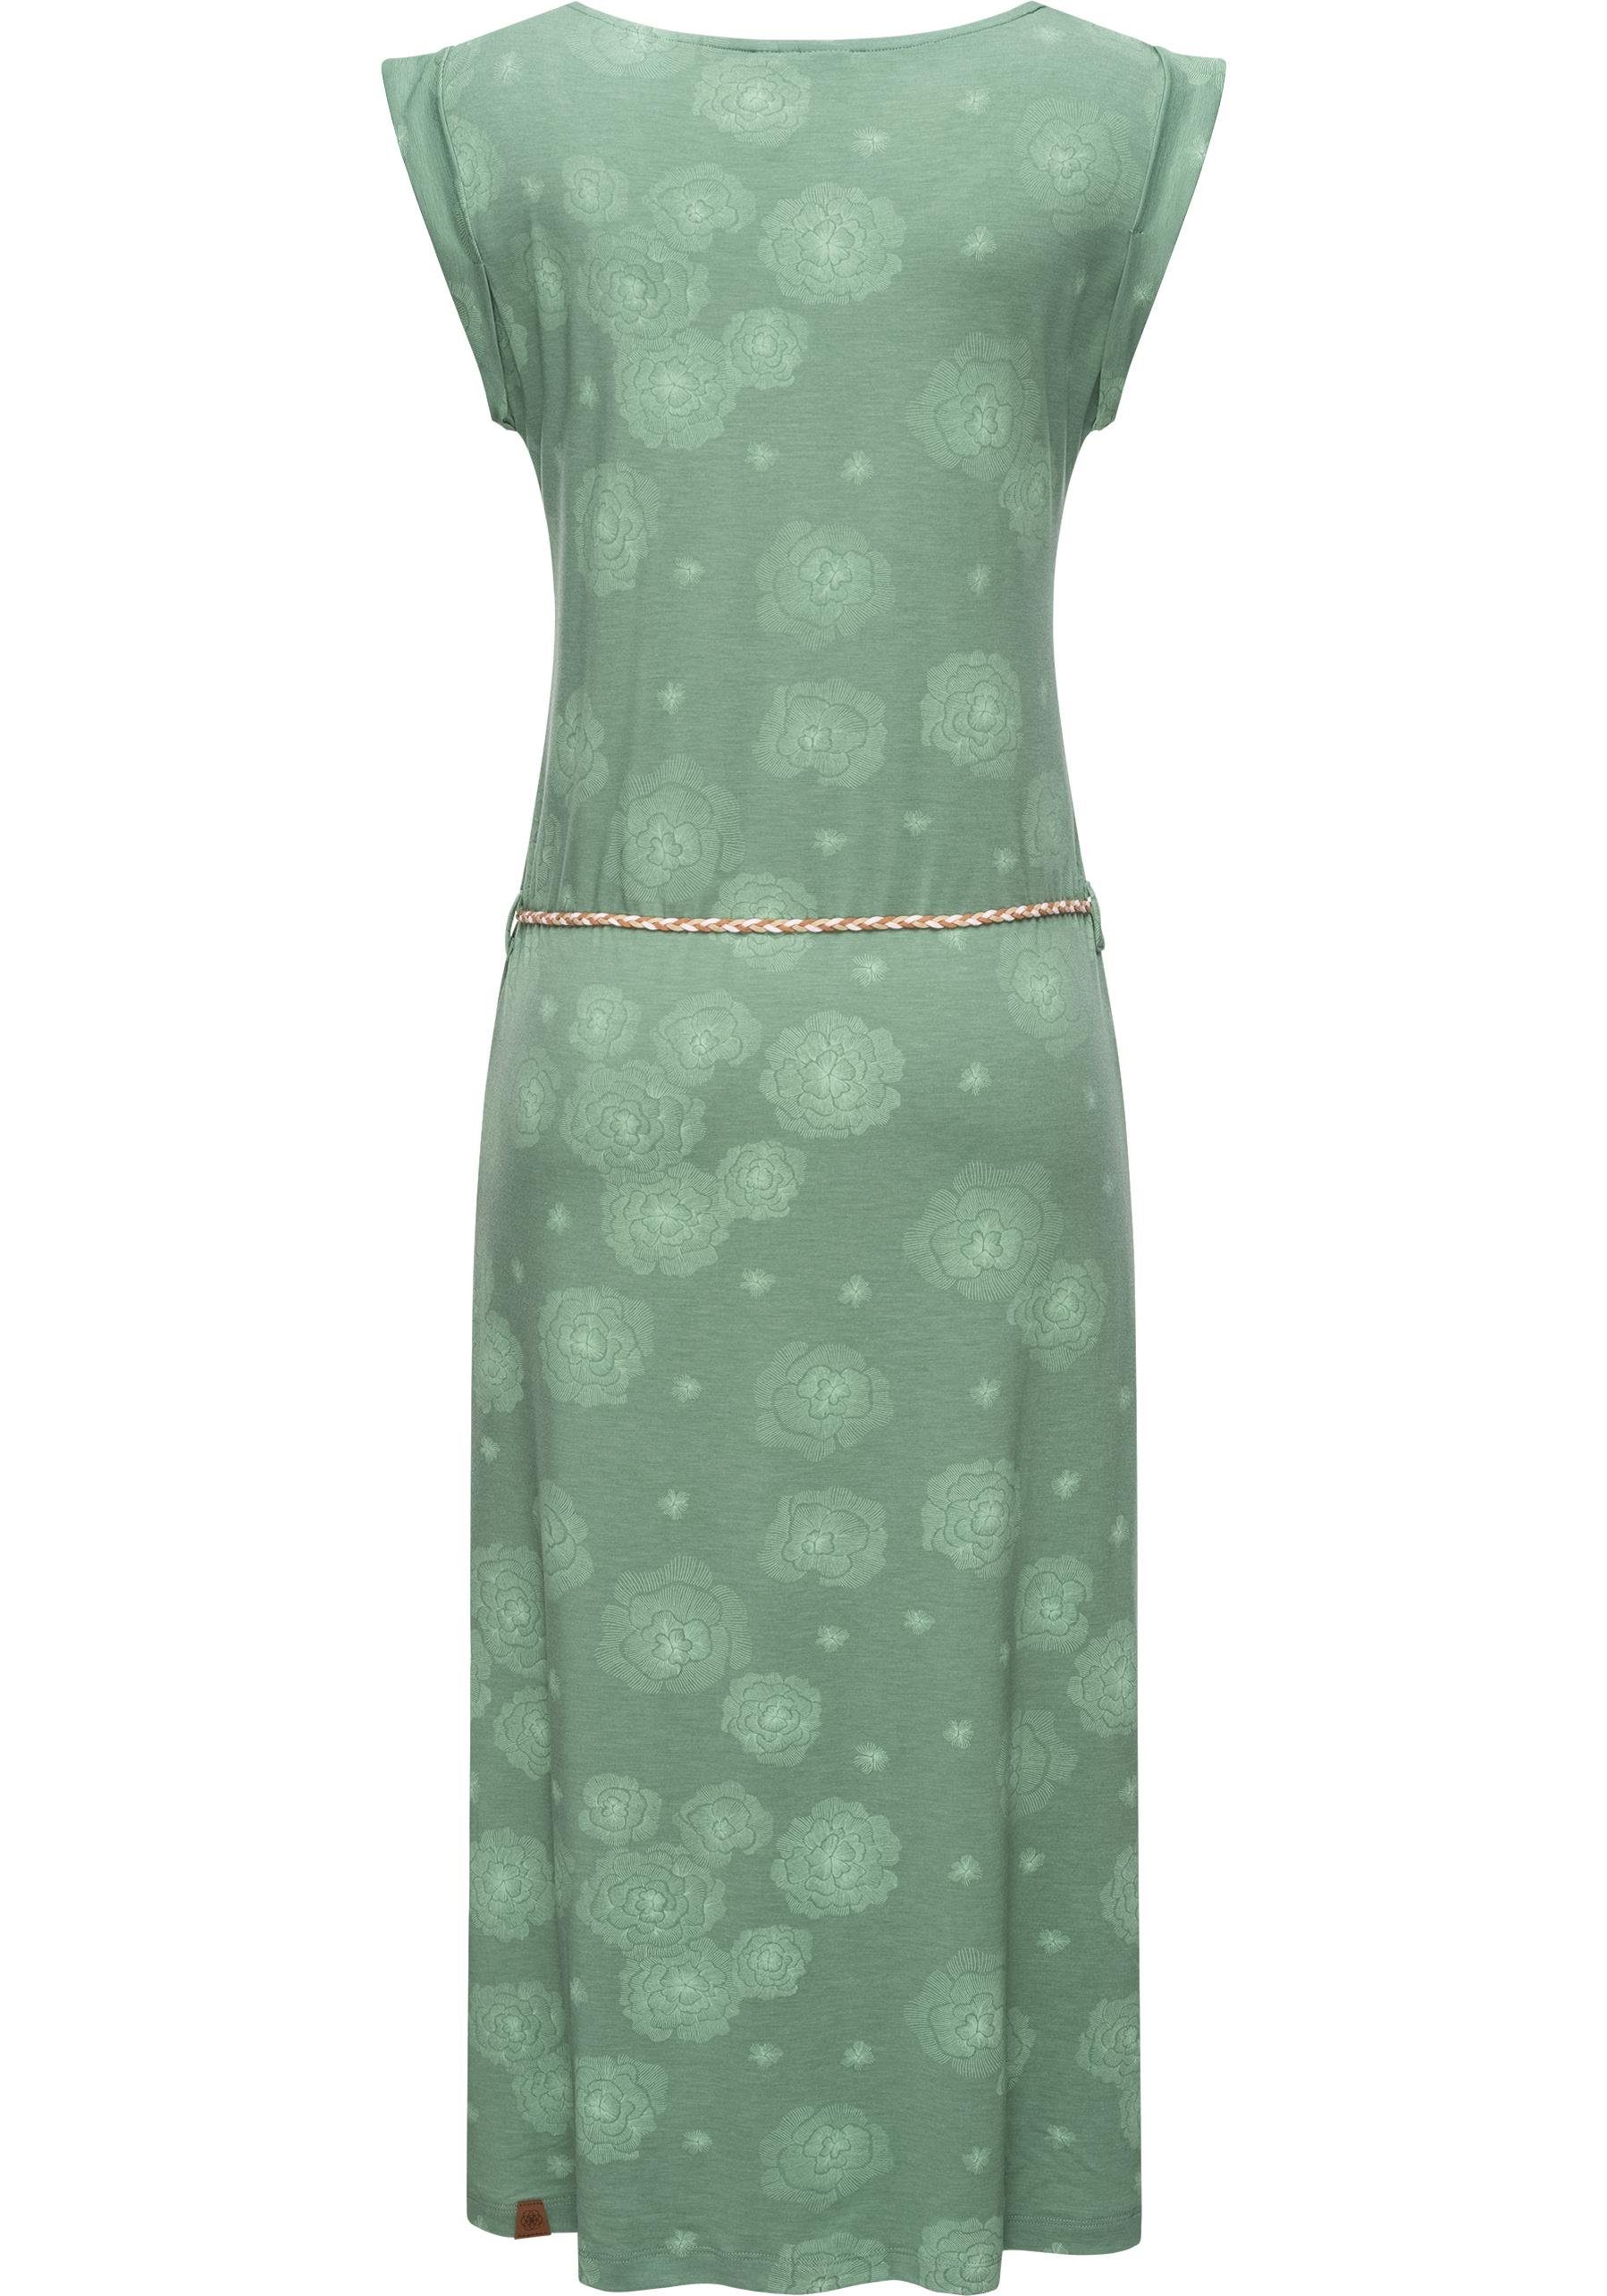 Midi Tag Maxikleid Ragwear dunkelgrün Allover-Print wadenlanges mit Sommerkleid